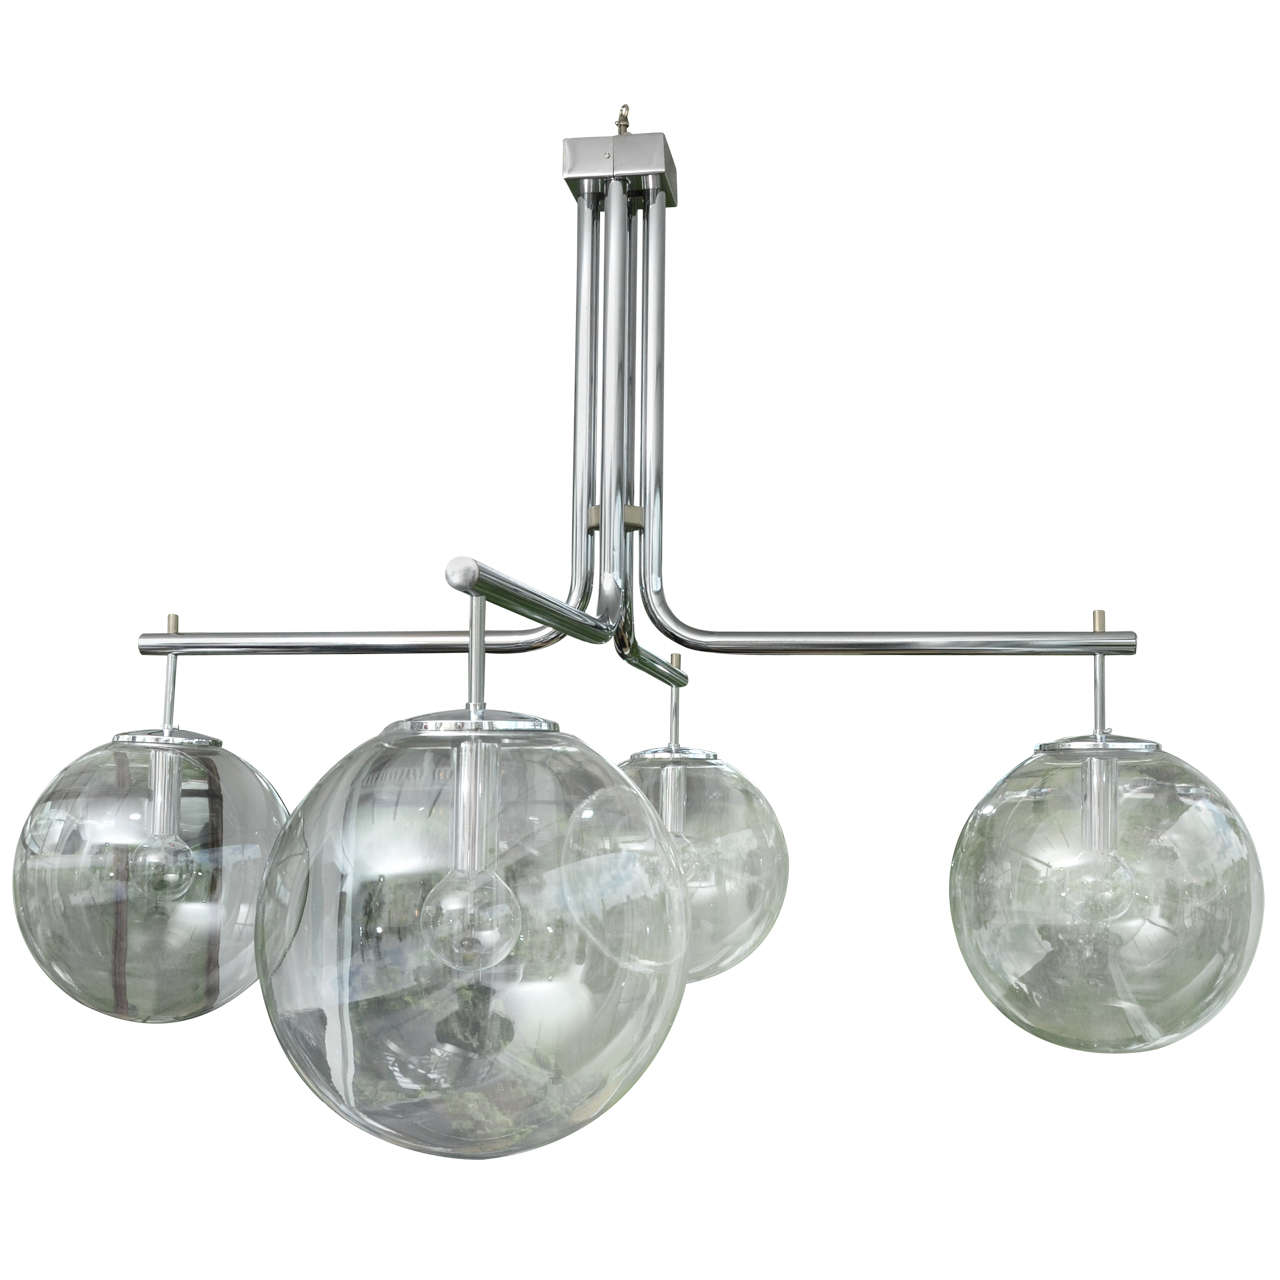 Tubular Chrome Chandelier with Four Large Glass Globes